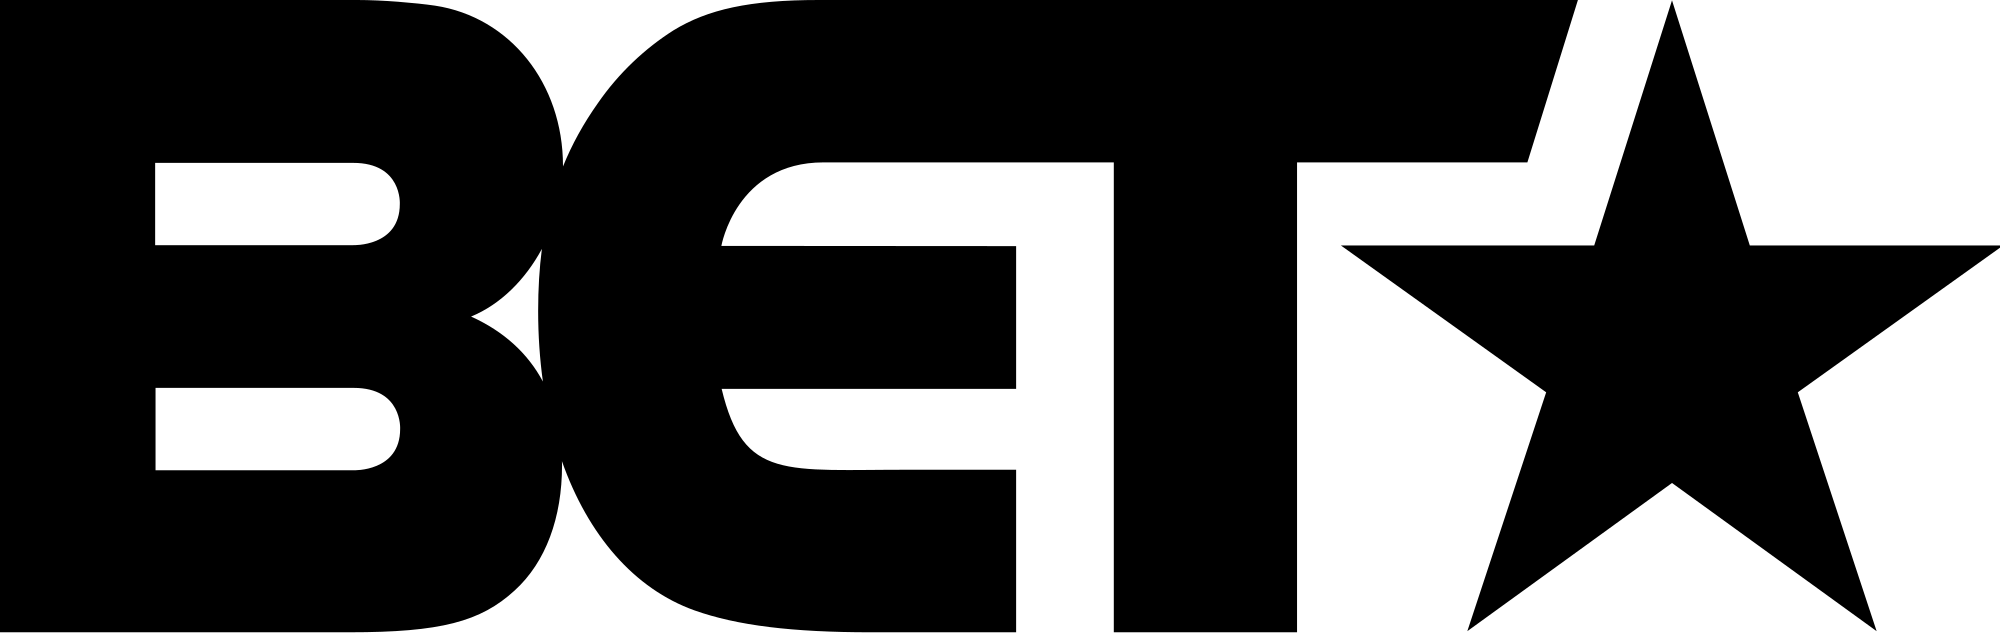 Bet Logo - File:BET Logo.svg - Wikimedia Commons